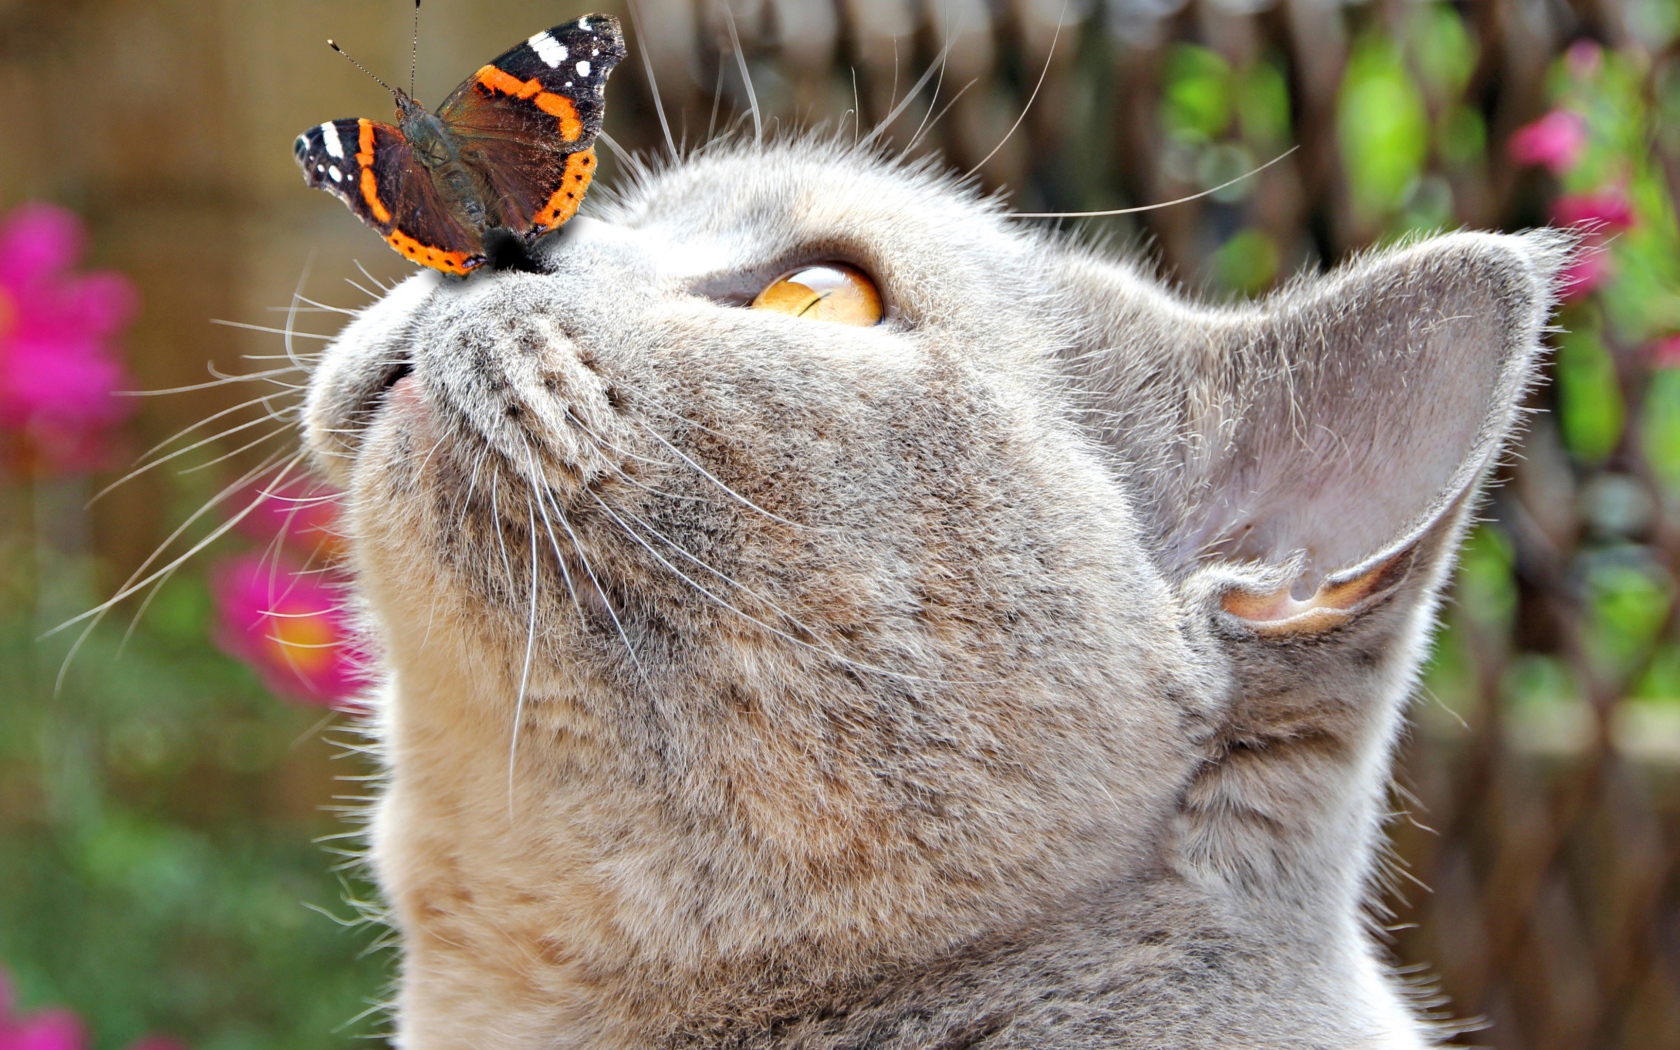 Бабочка сидит на носу у серого кота